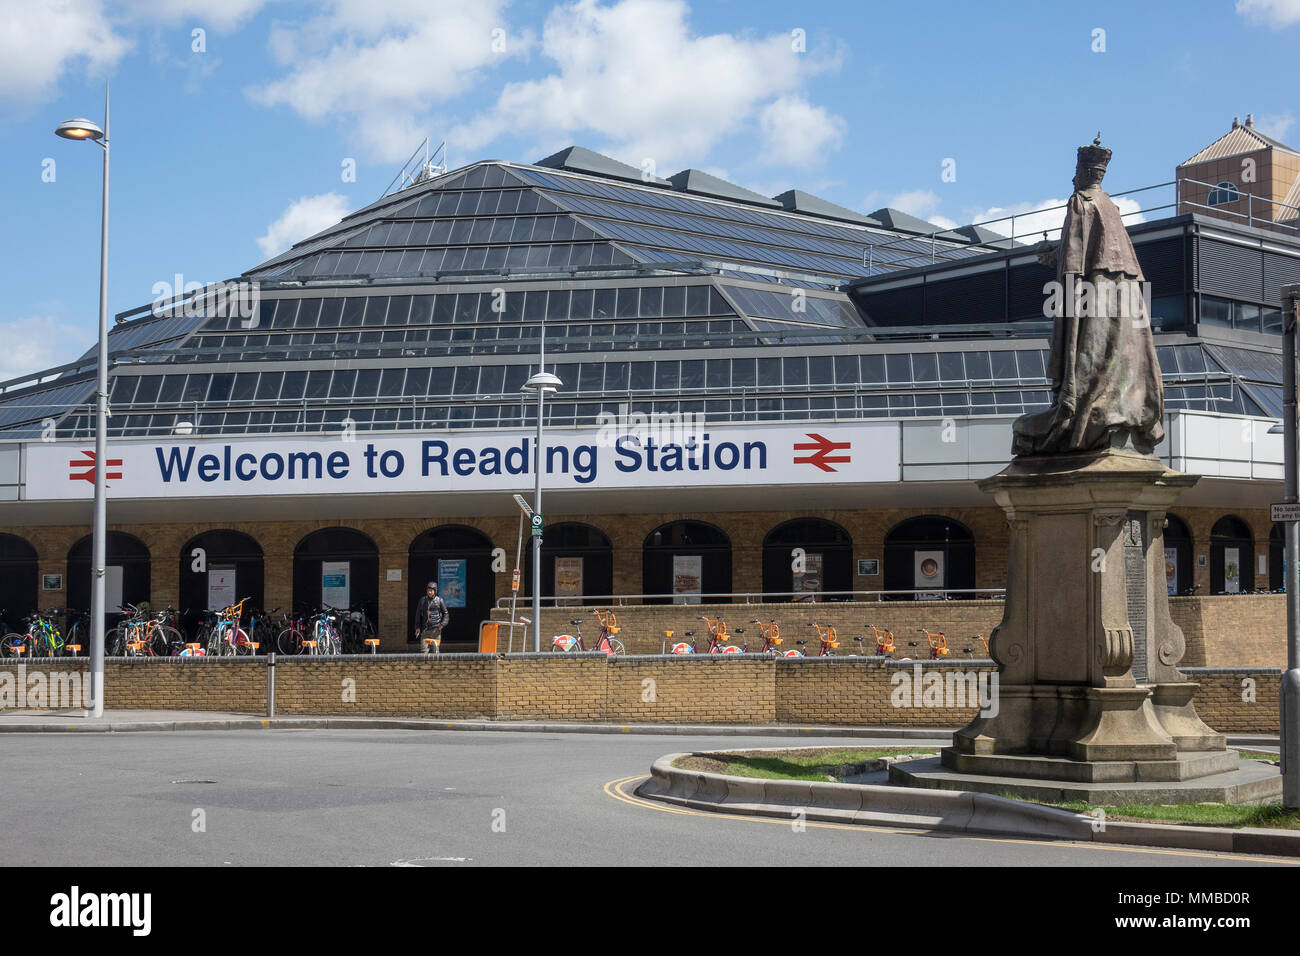 L'Angleterre, Berkshire, la lecture, la gare ferroviaire Banque D'Images